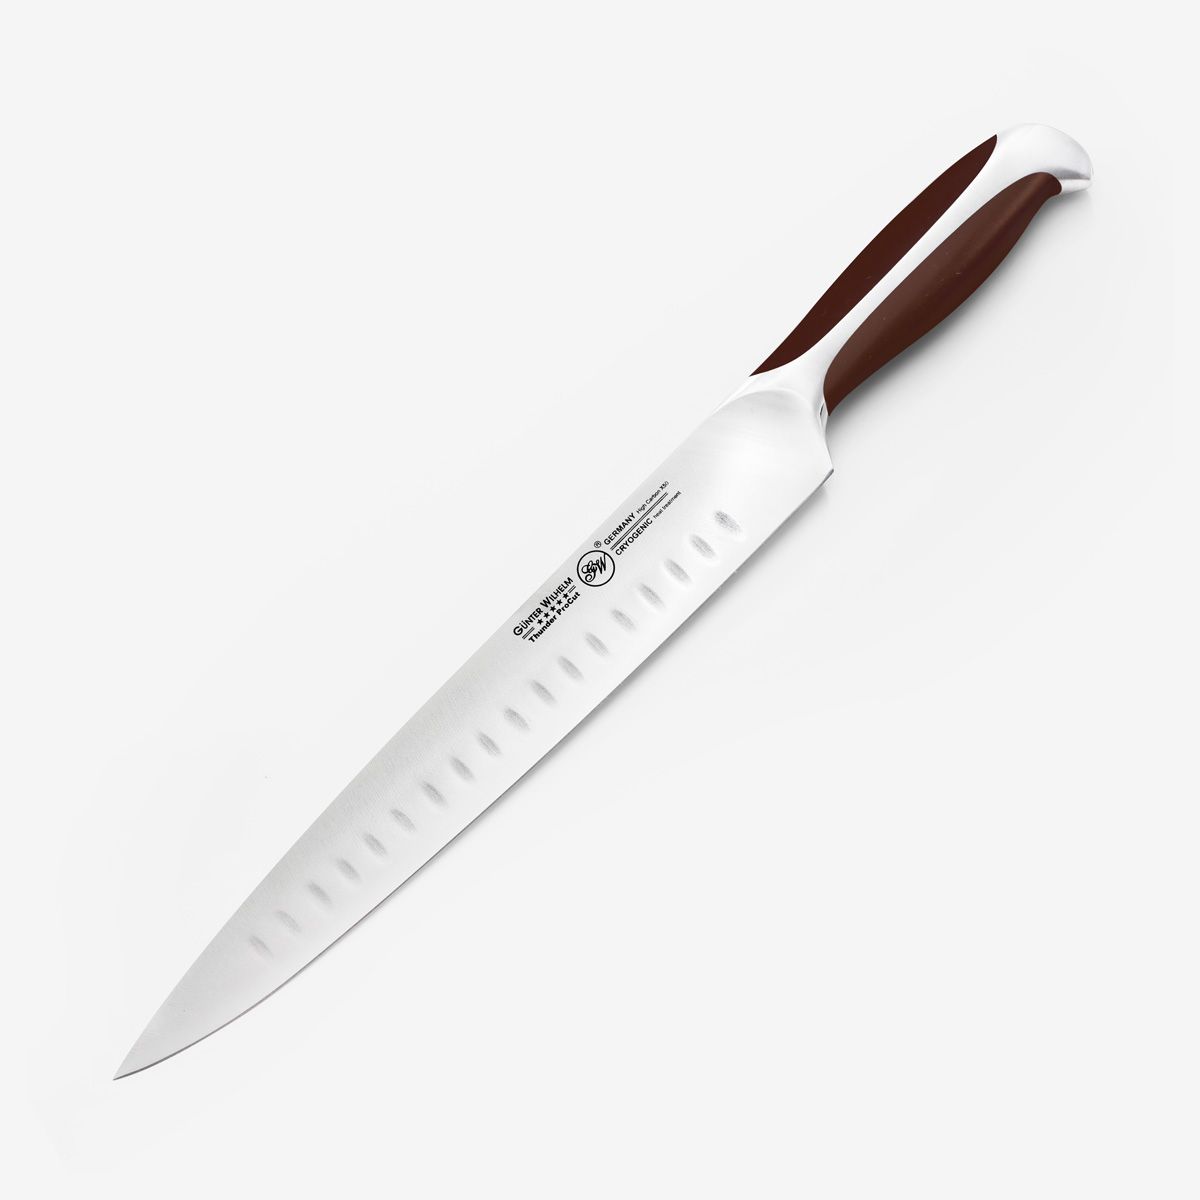 Gunter Wilhelm Thunder Carving Knife, 10 Inch | Brownish ABS Handle SKU: 51-521-0210